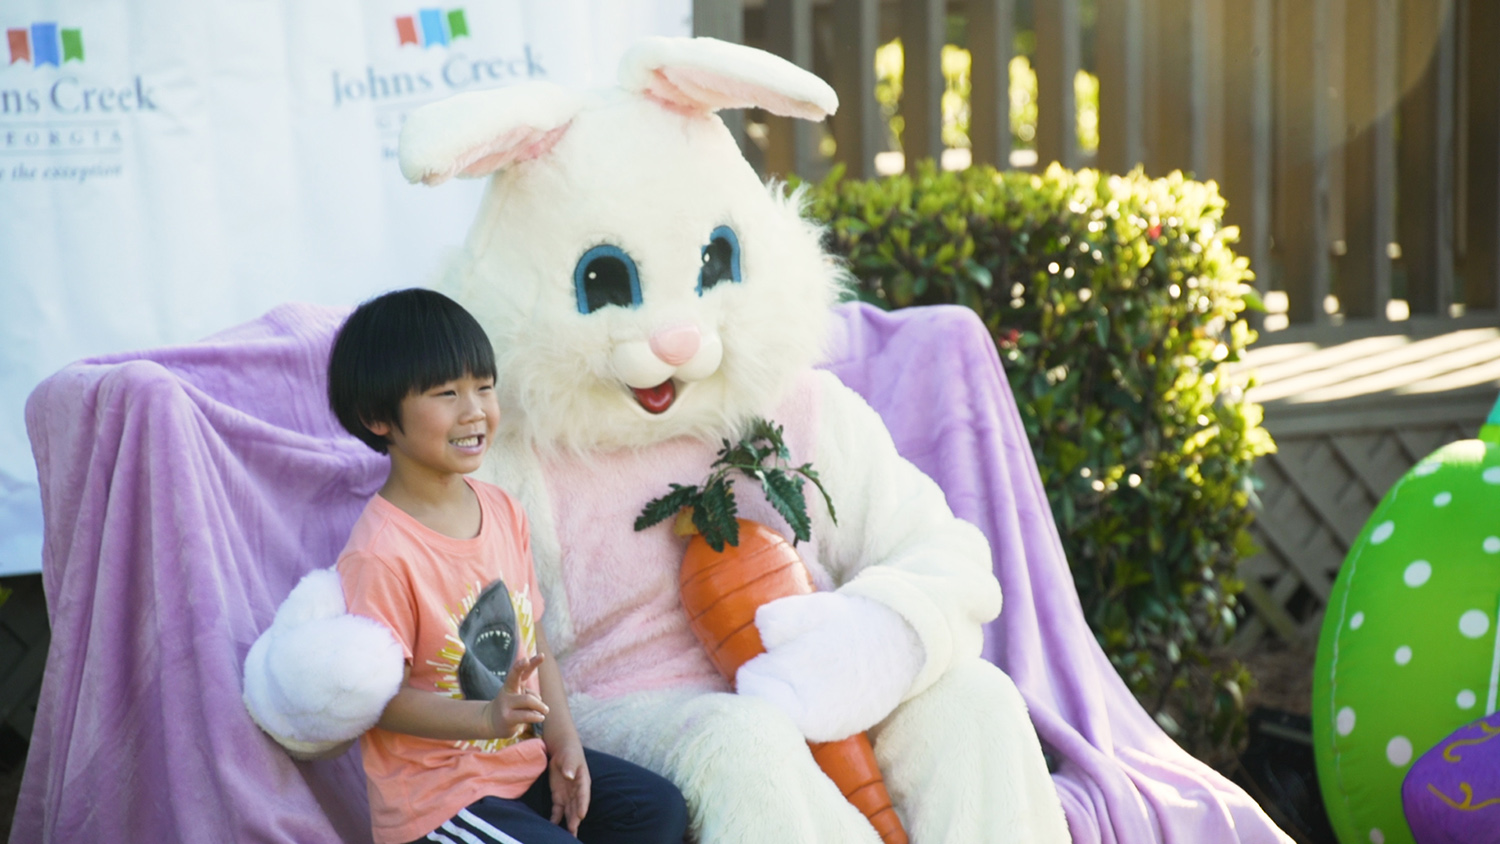 Easter Bunny Hop